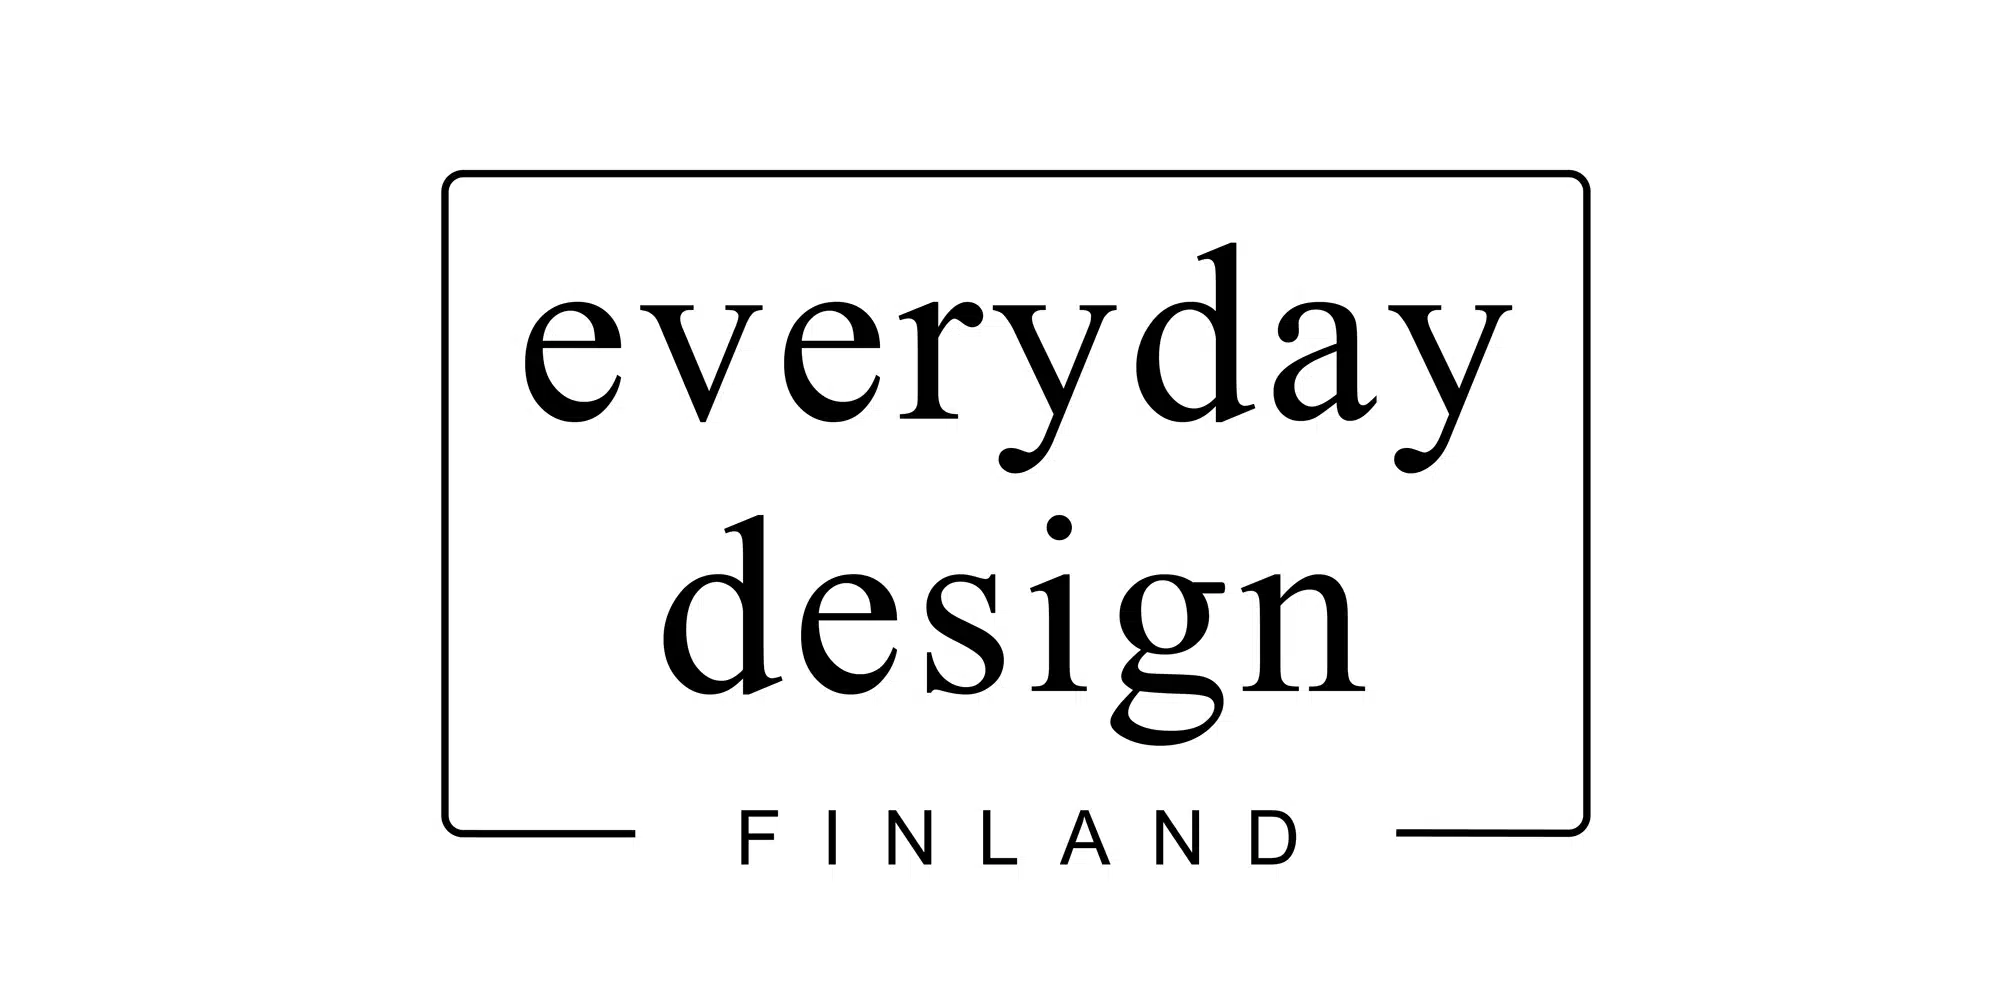 everyday design papiertütenhalter metall aufbewharung finnland logo